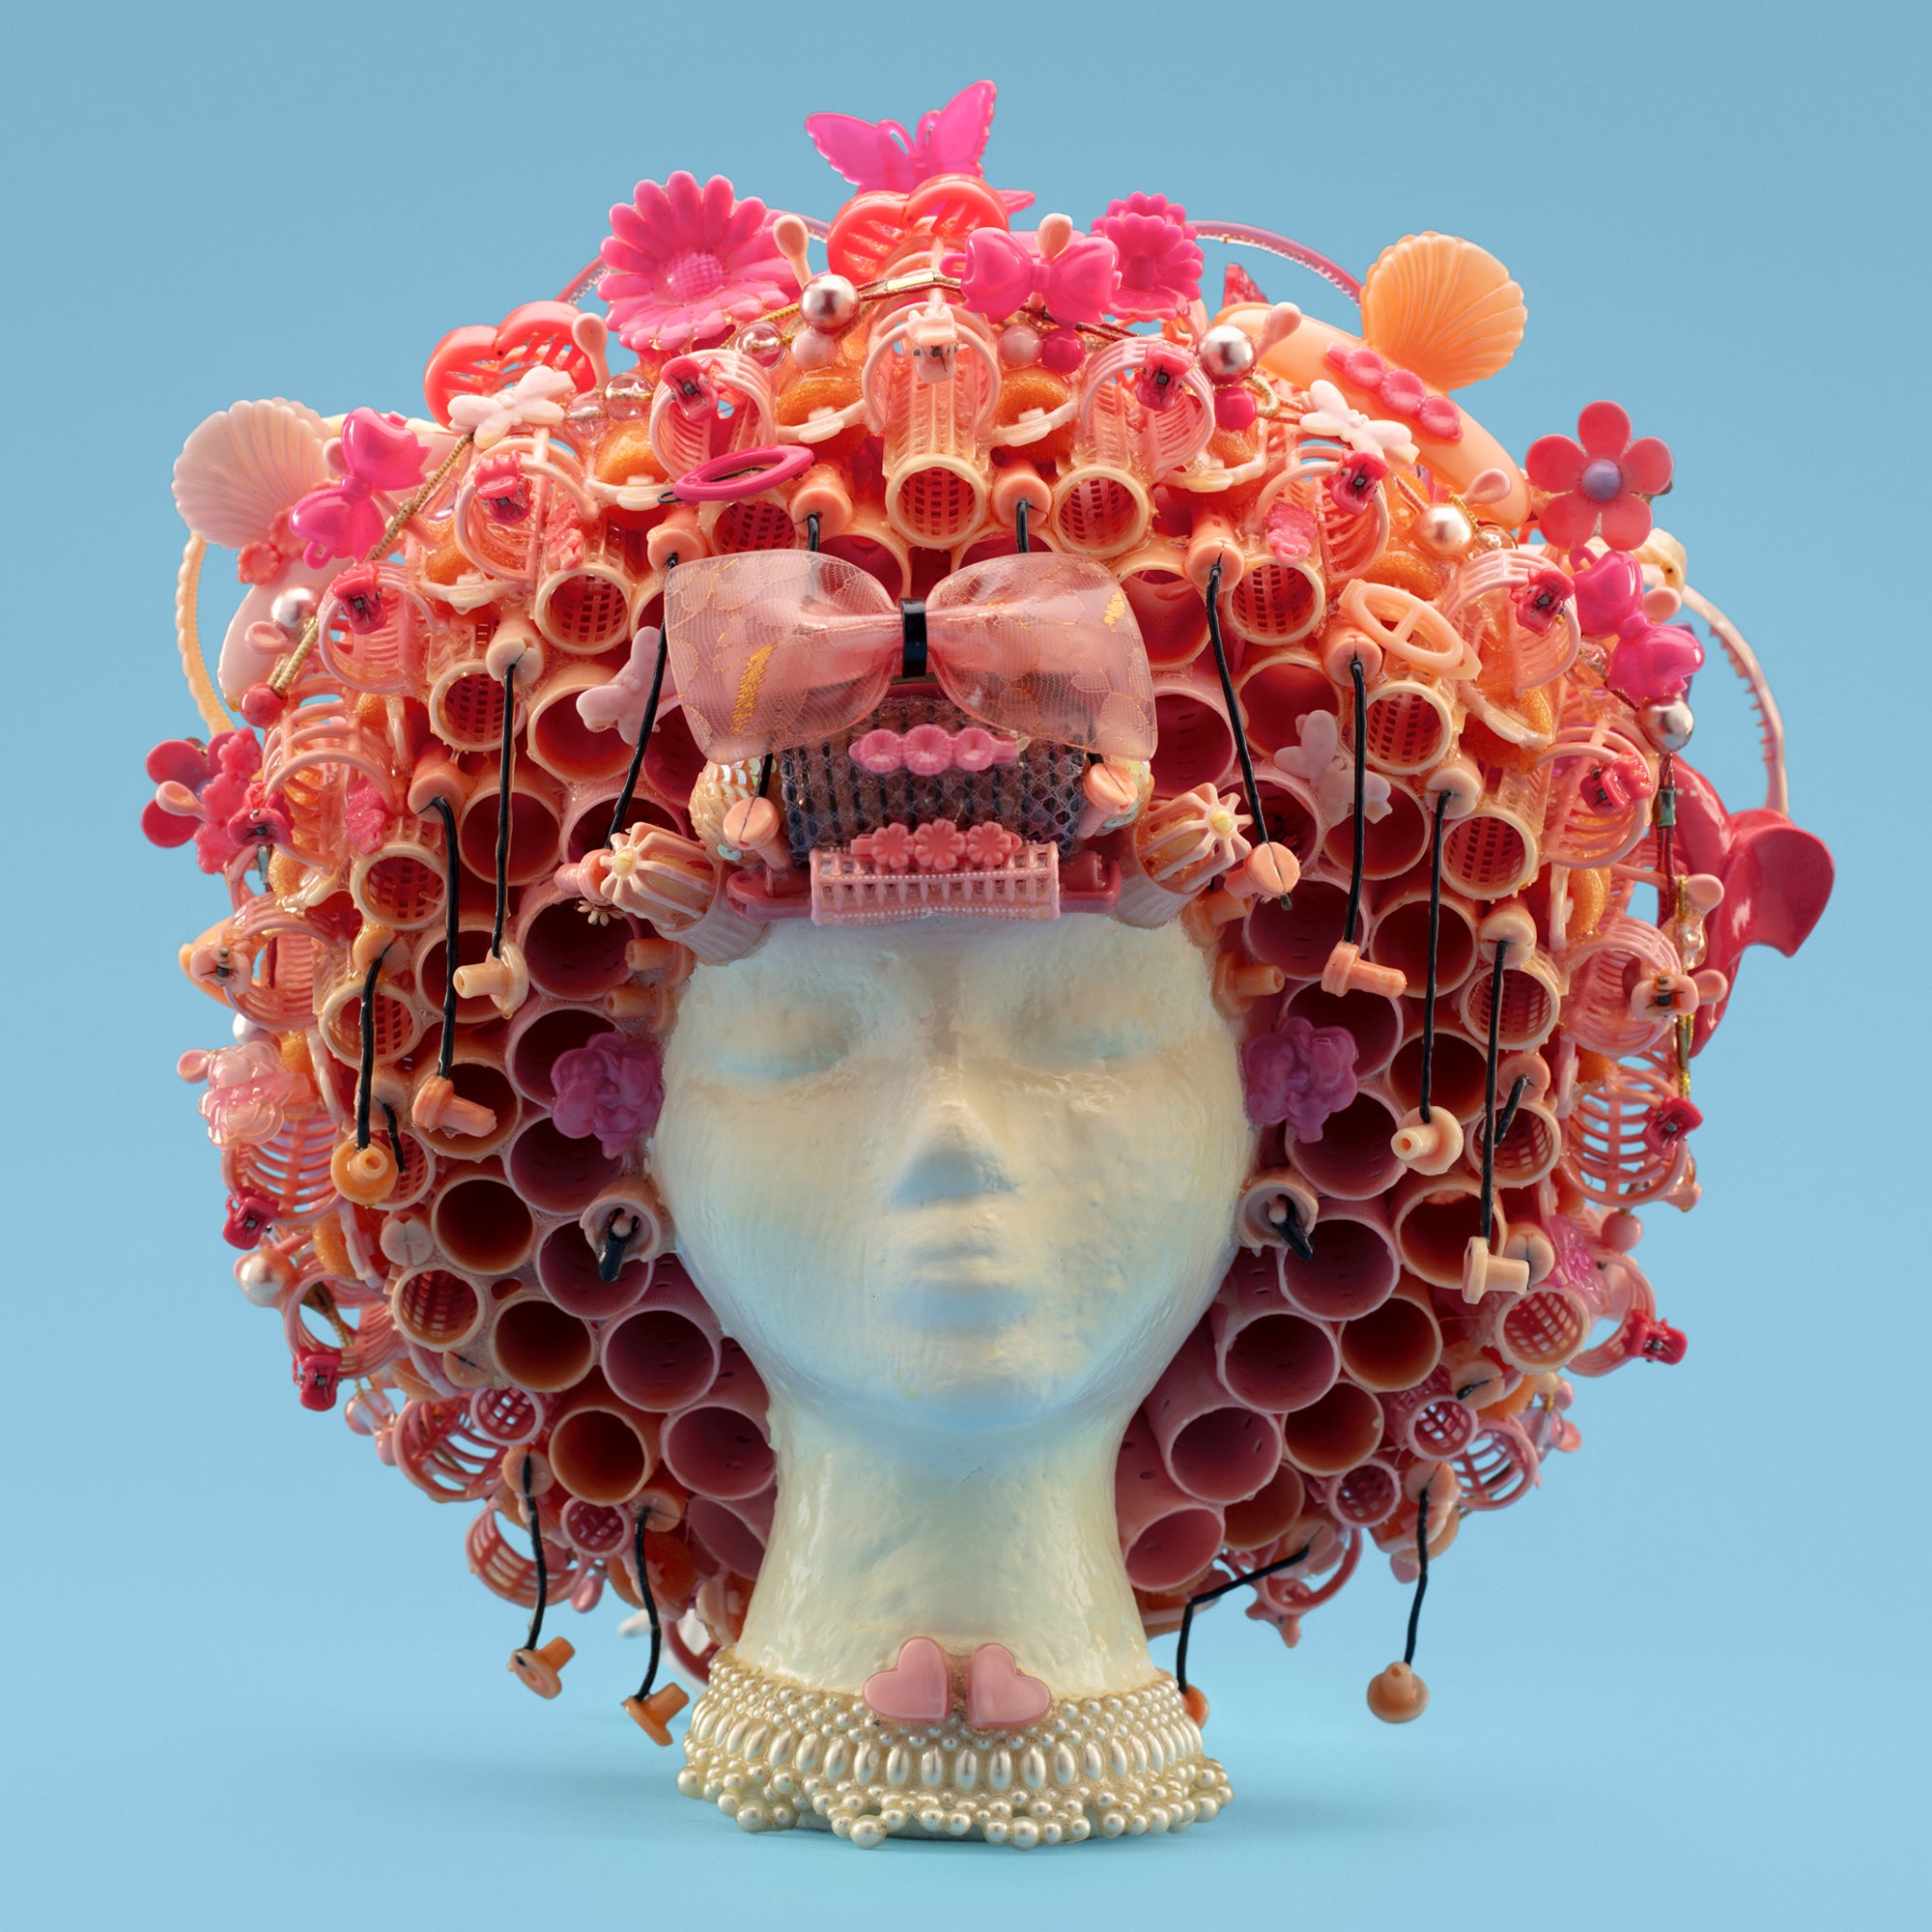 "The Afro" Wig Sculpture; artist Jeff Hafler, Beauty Bubble Salon and Museum